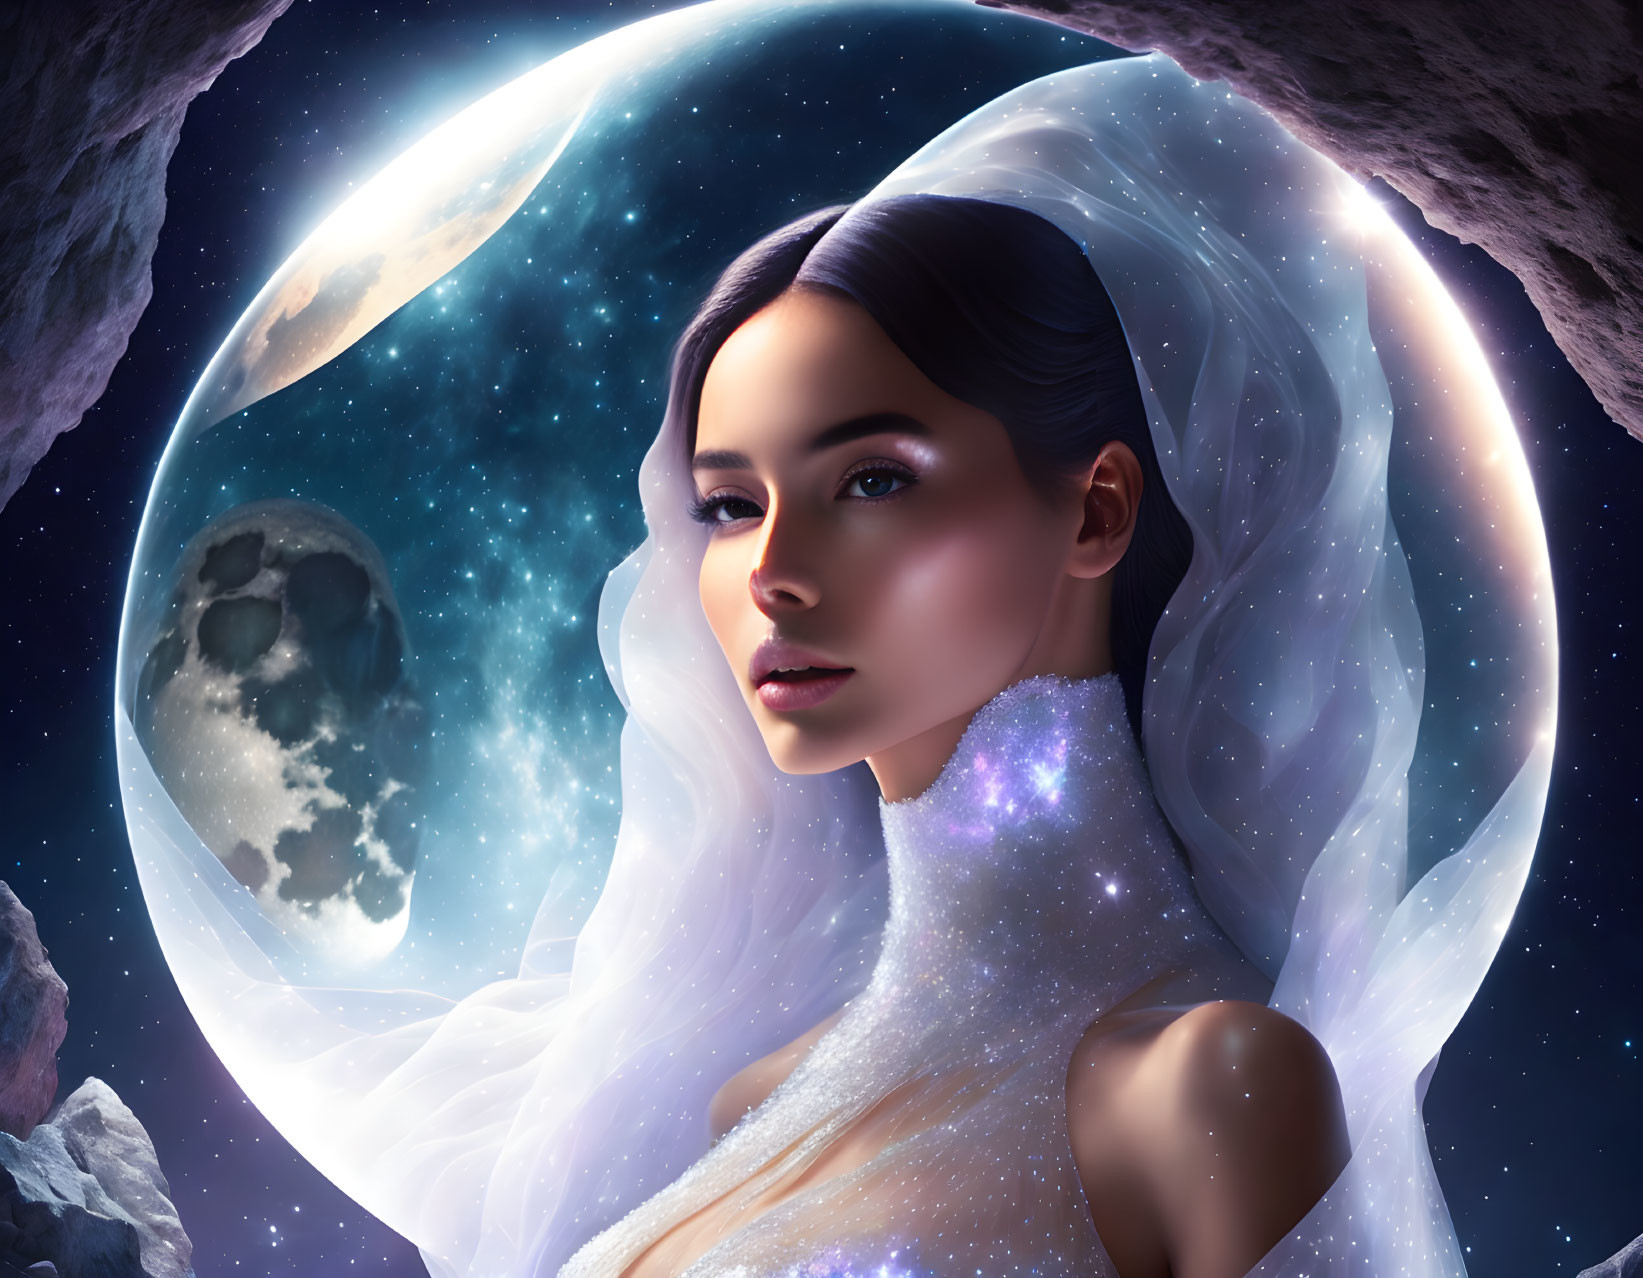 Celestial-themed digital artwork with woman in galaxy attire